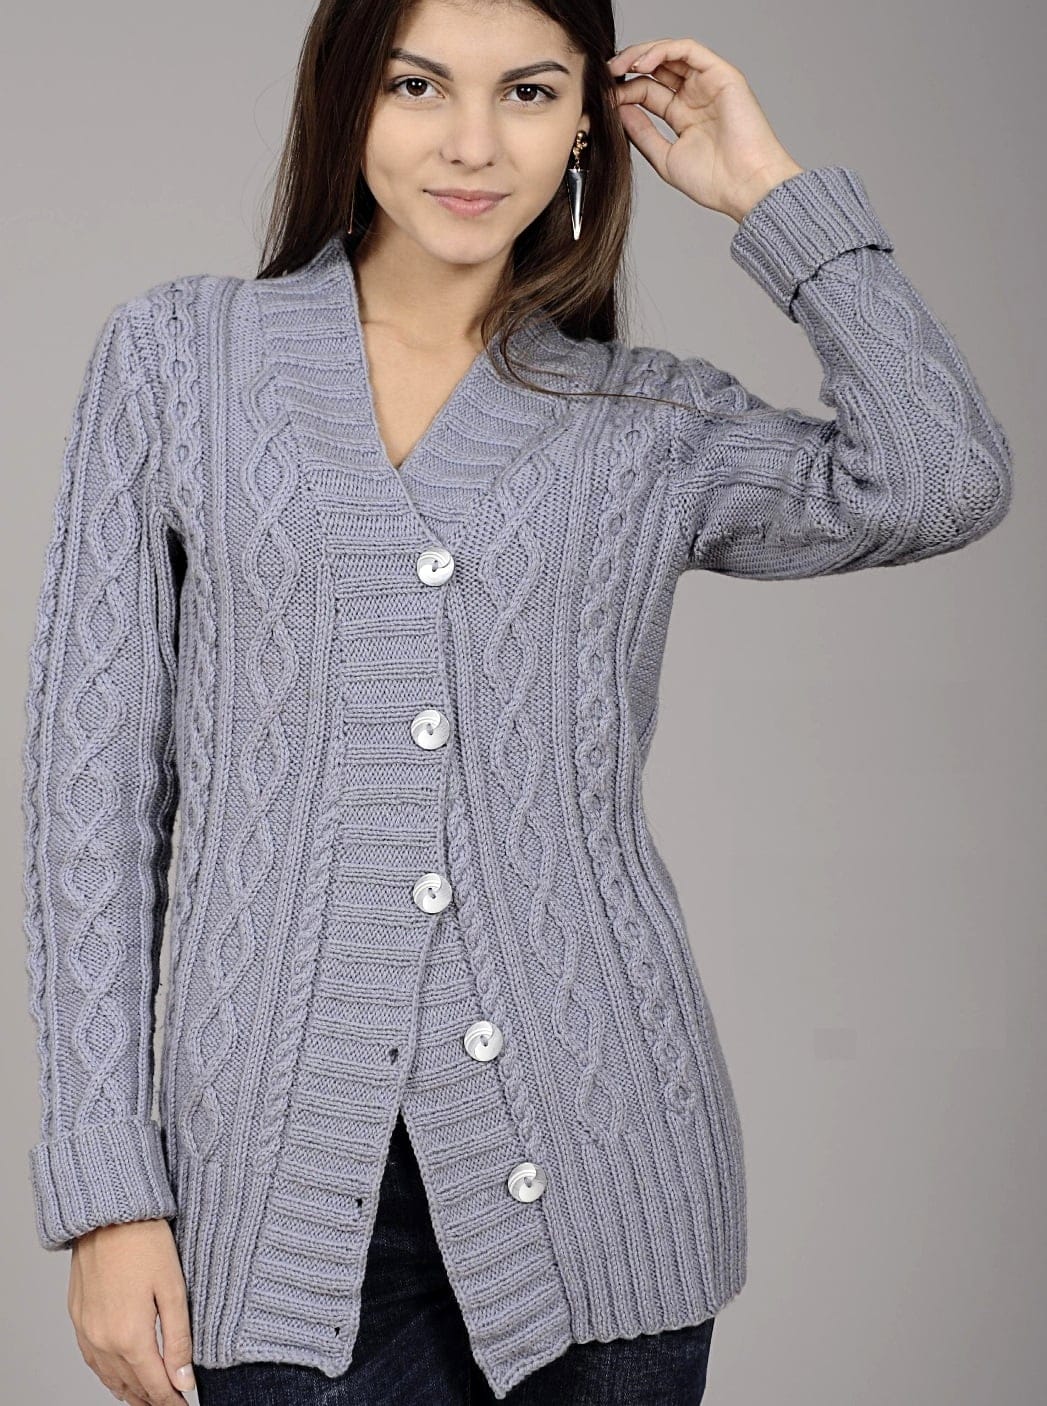 Free Knitting Patterns - Jacket with Cable Diamond Pattern